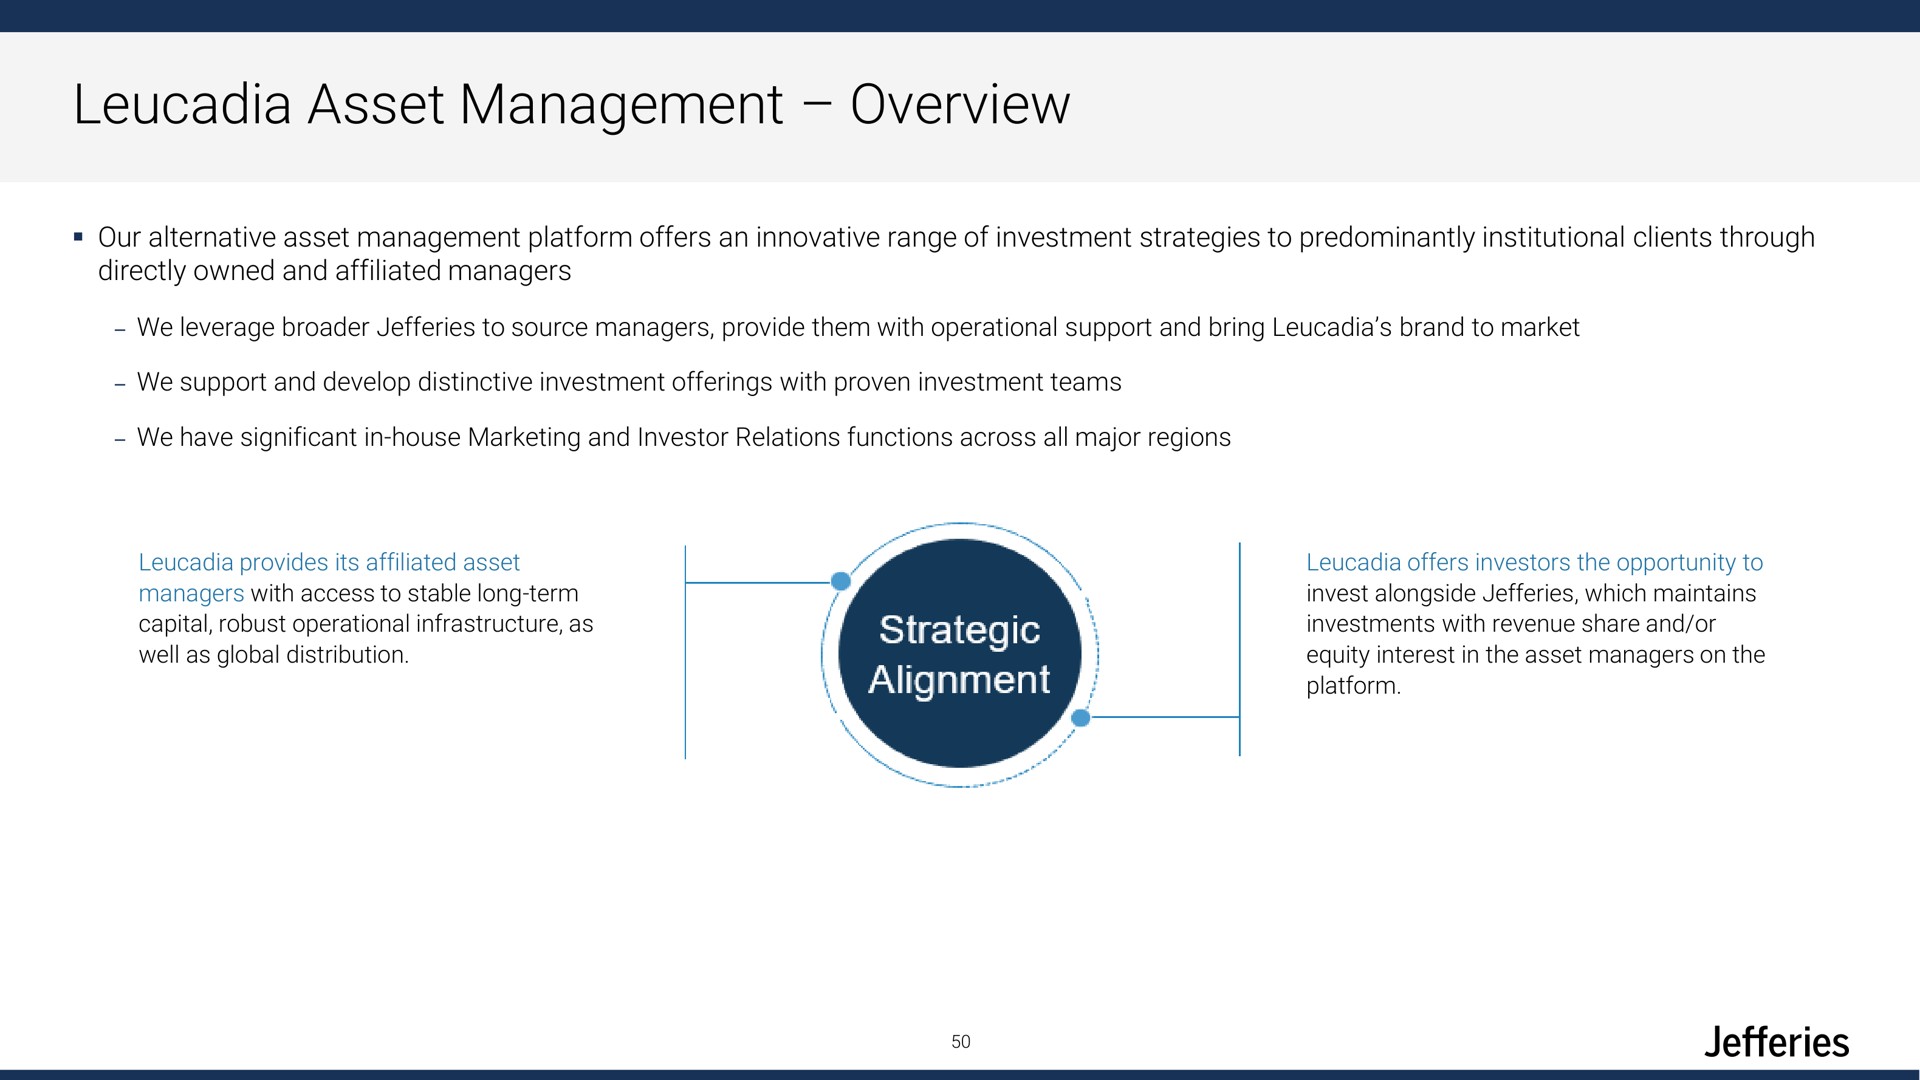 asset management overview | Jefferies Financial Group